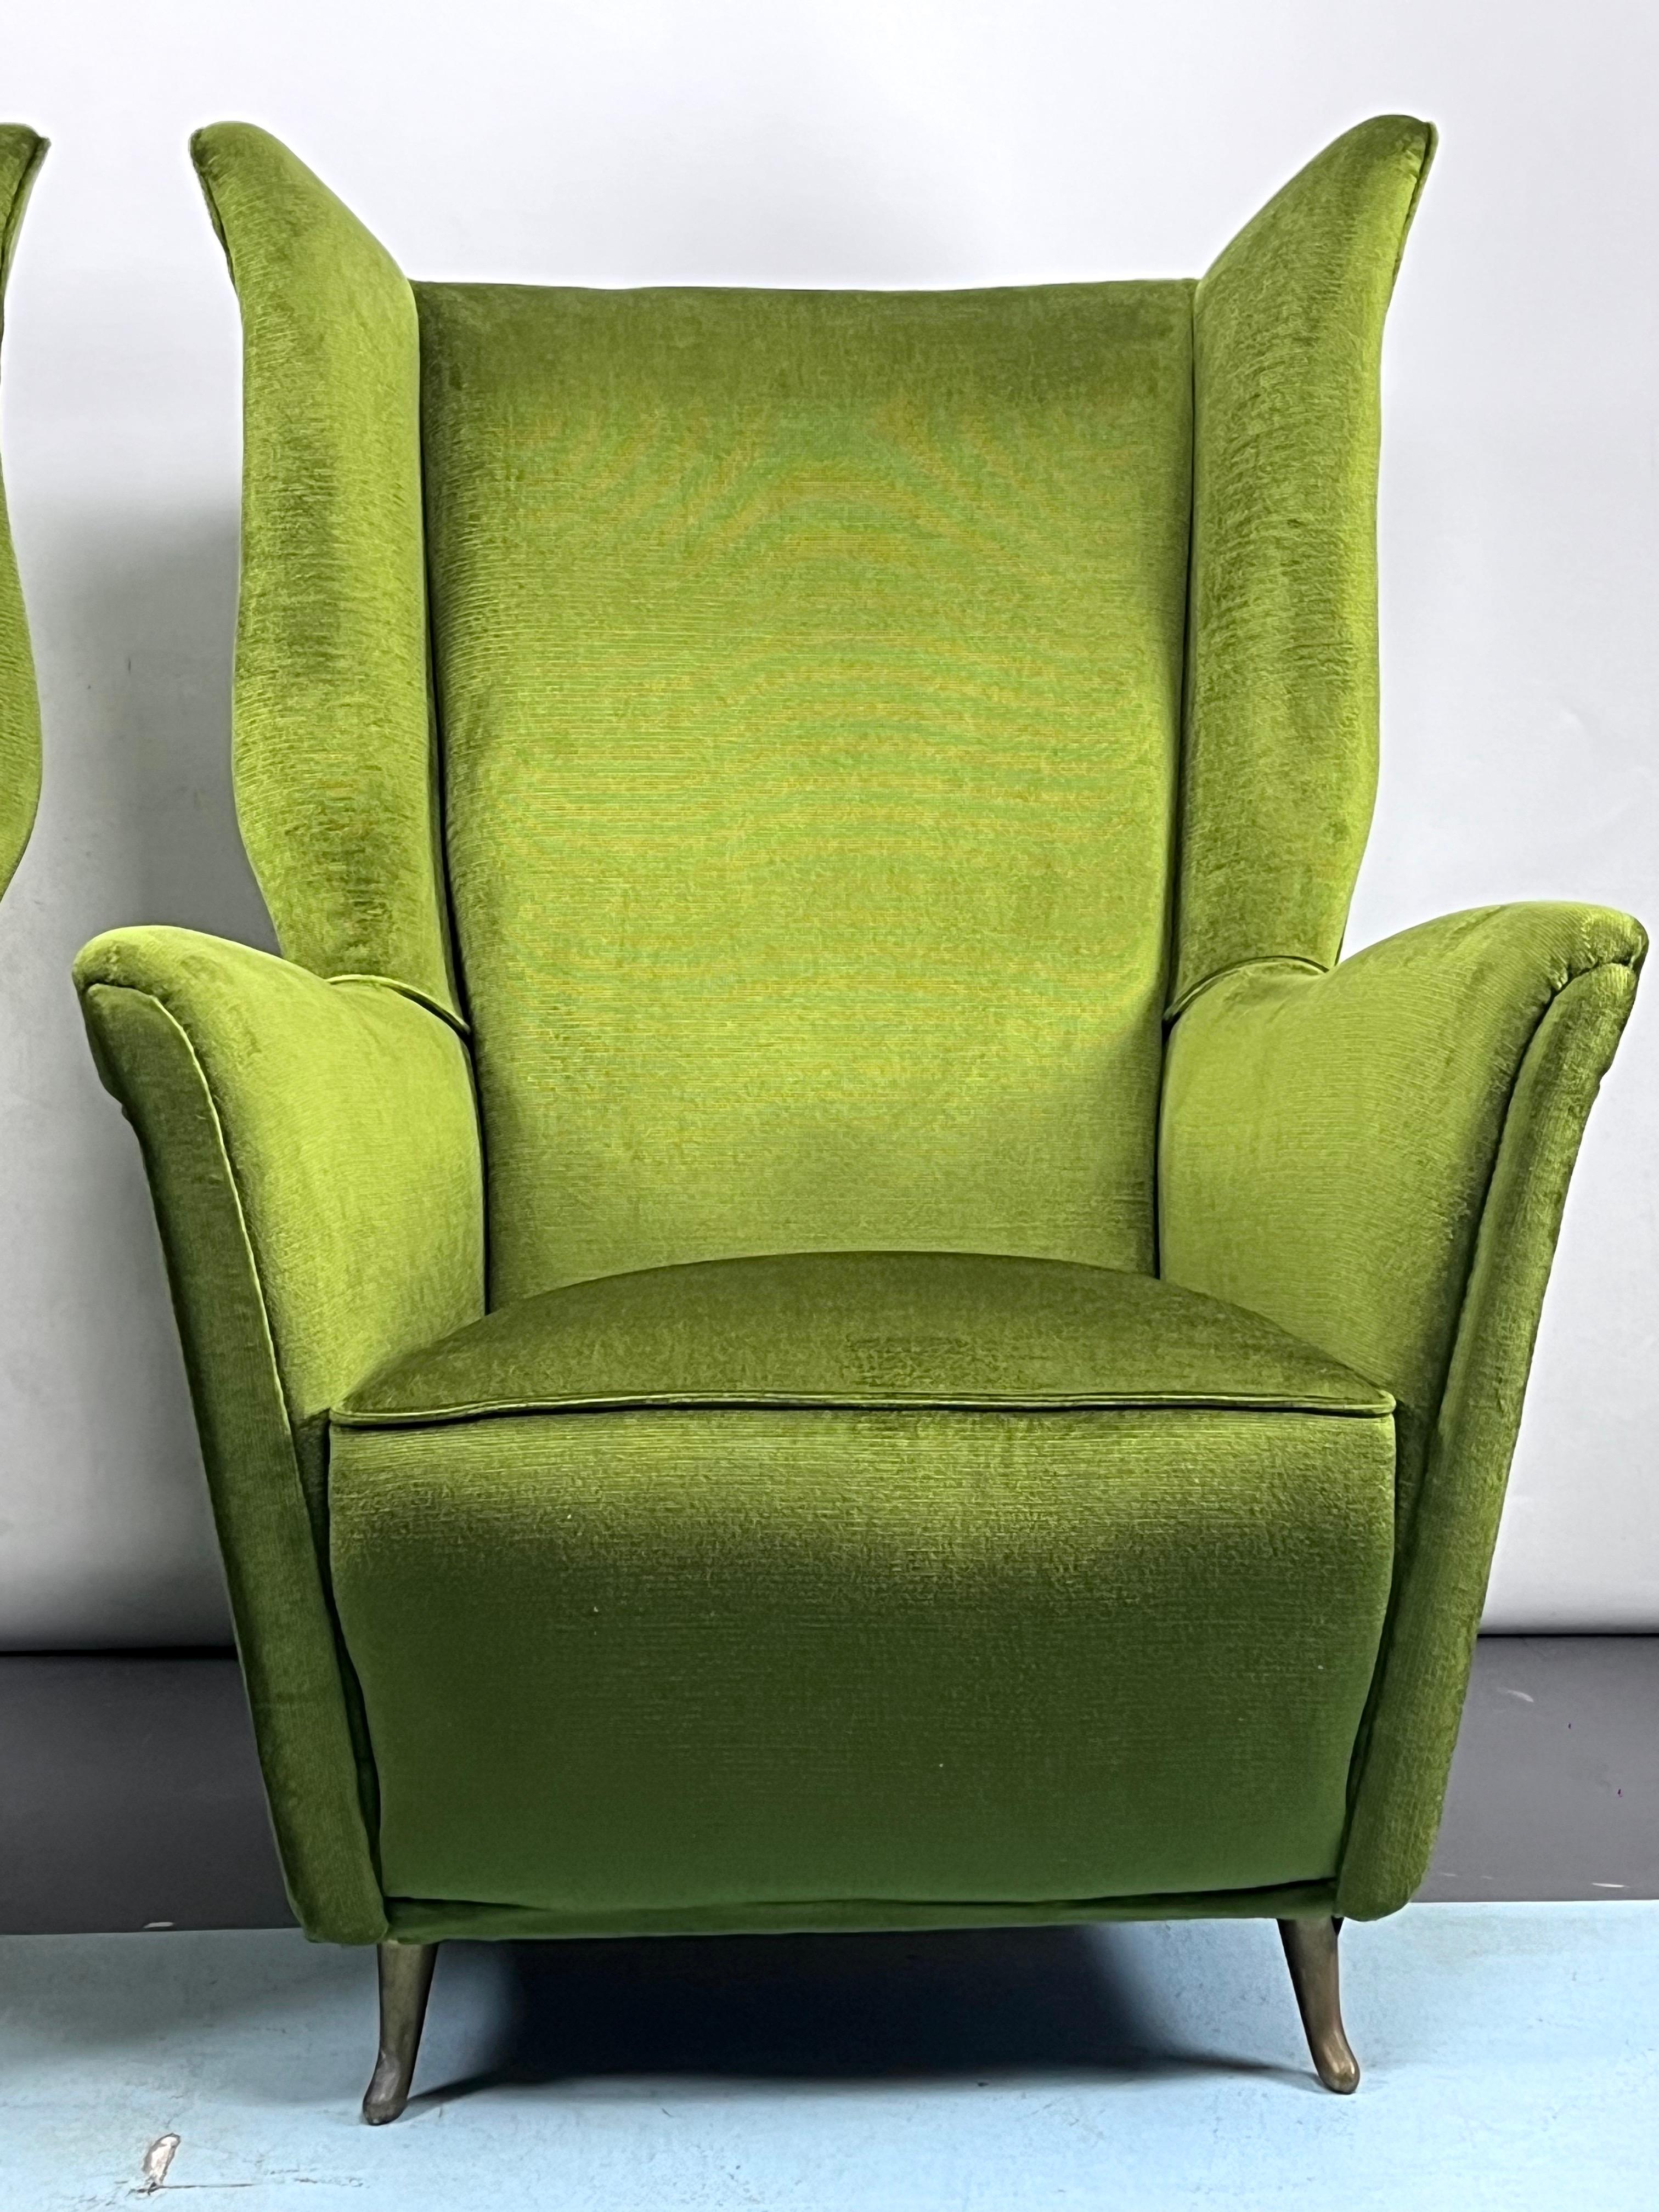 Rare Midcentury Italian Green Velvet ISA Armchairs Attributable to Gio Ponti For Sale 1